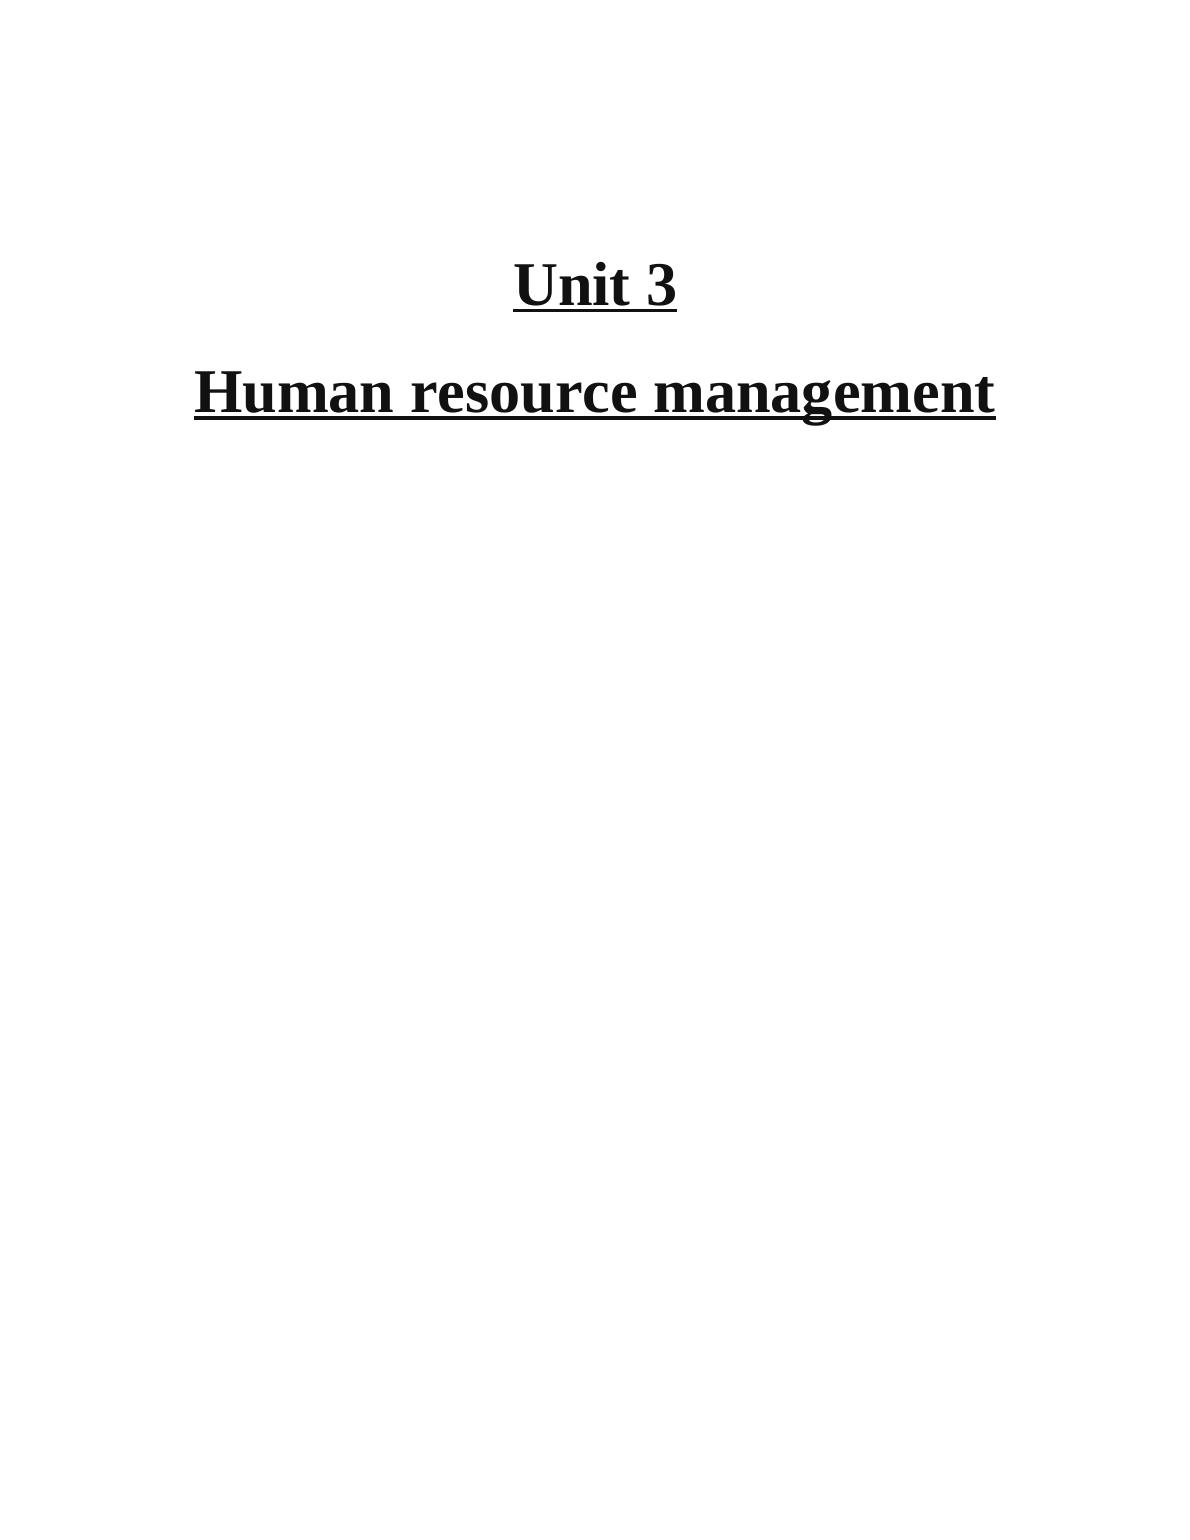 Unit 3 Human resource management  Assignment_1